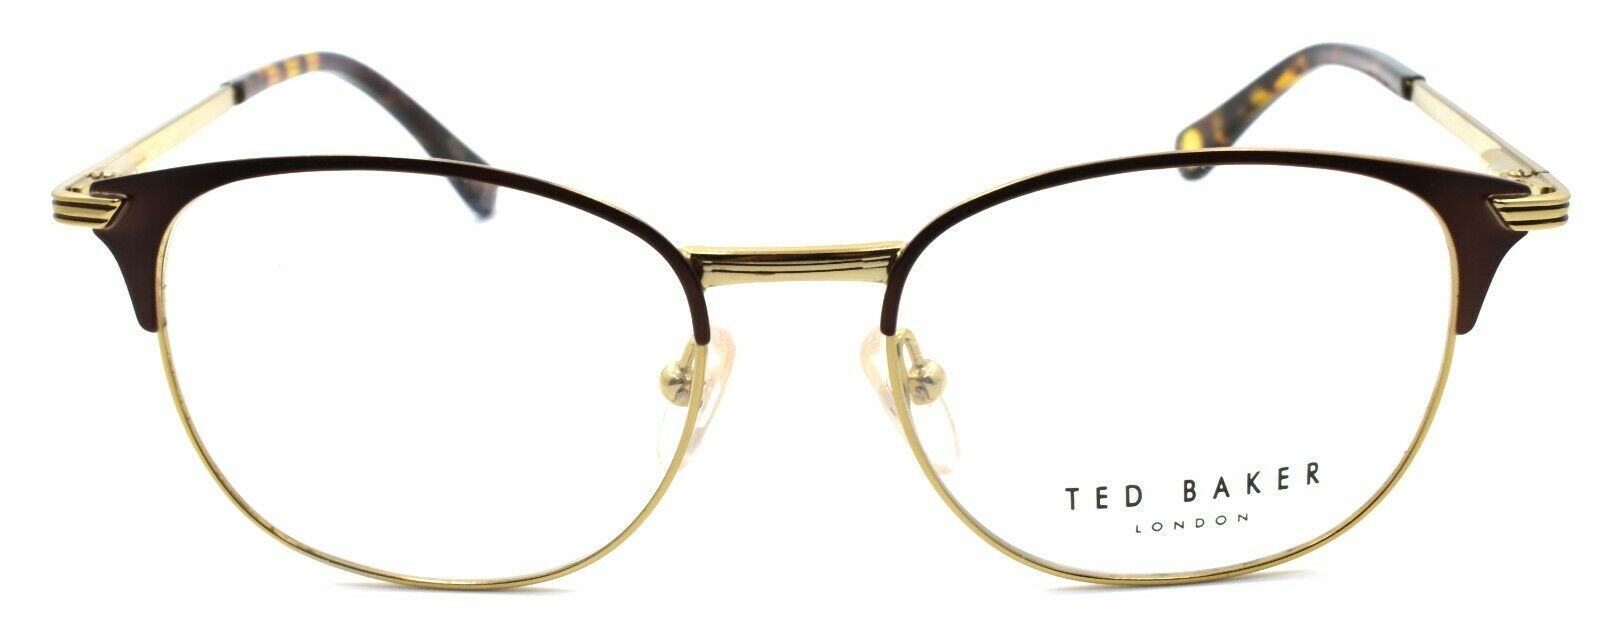 2-Ted Baker Access 2218 104 Women's Glasses Frames Petite 48-16-135 Brown / Gold-4894327098651-IKSpecs